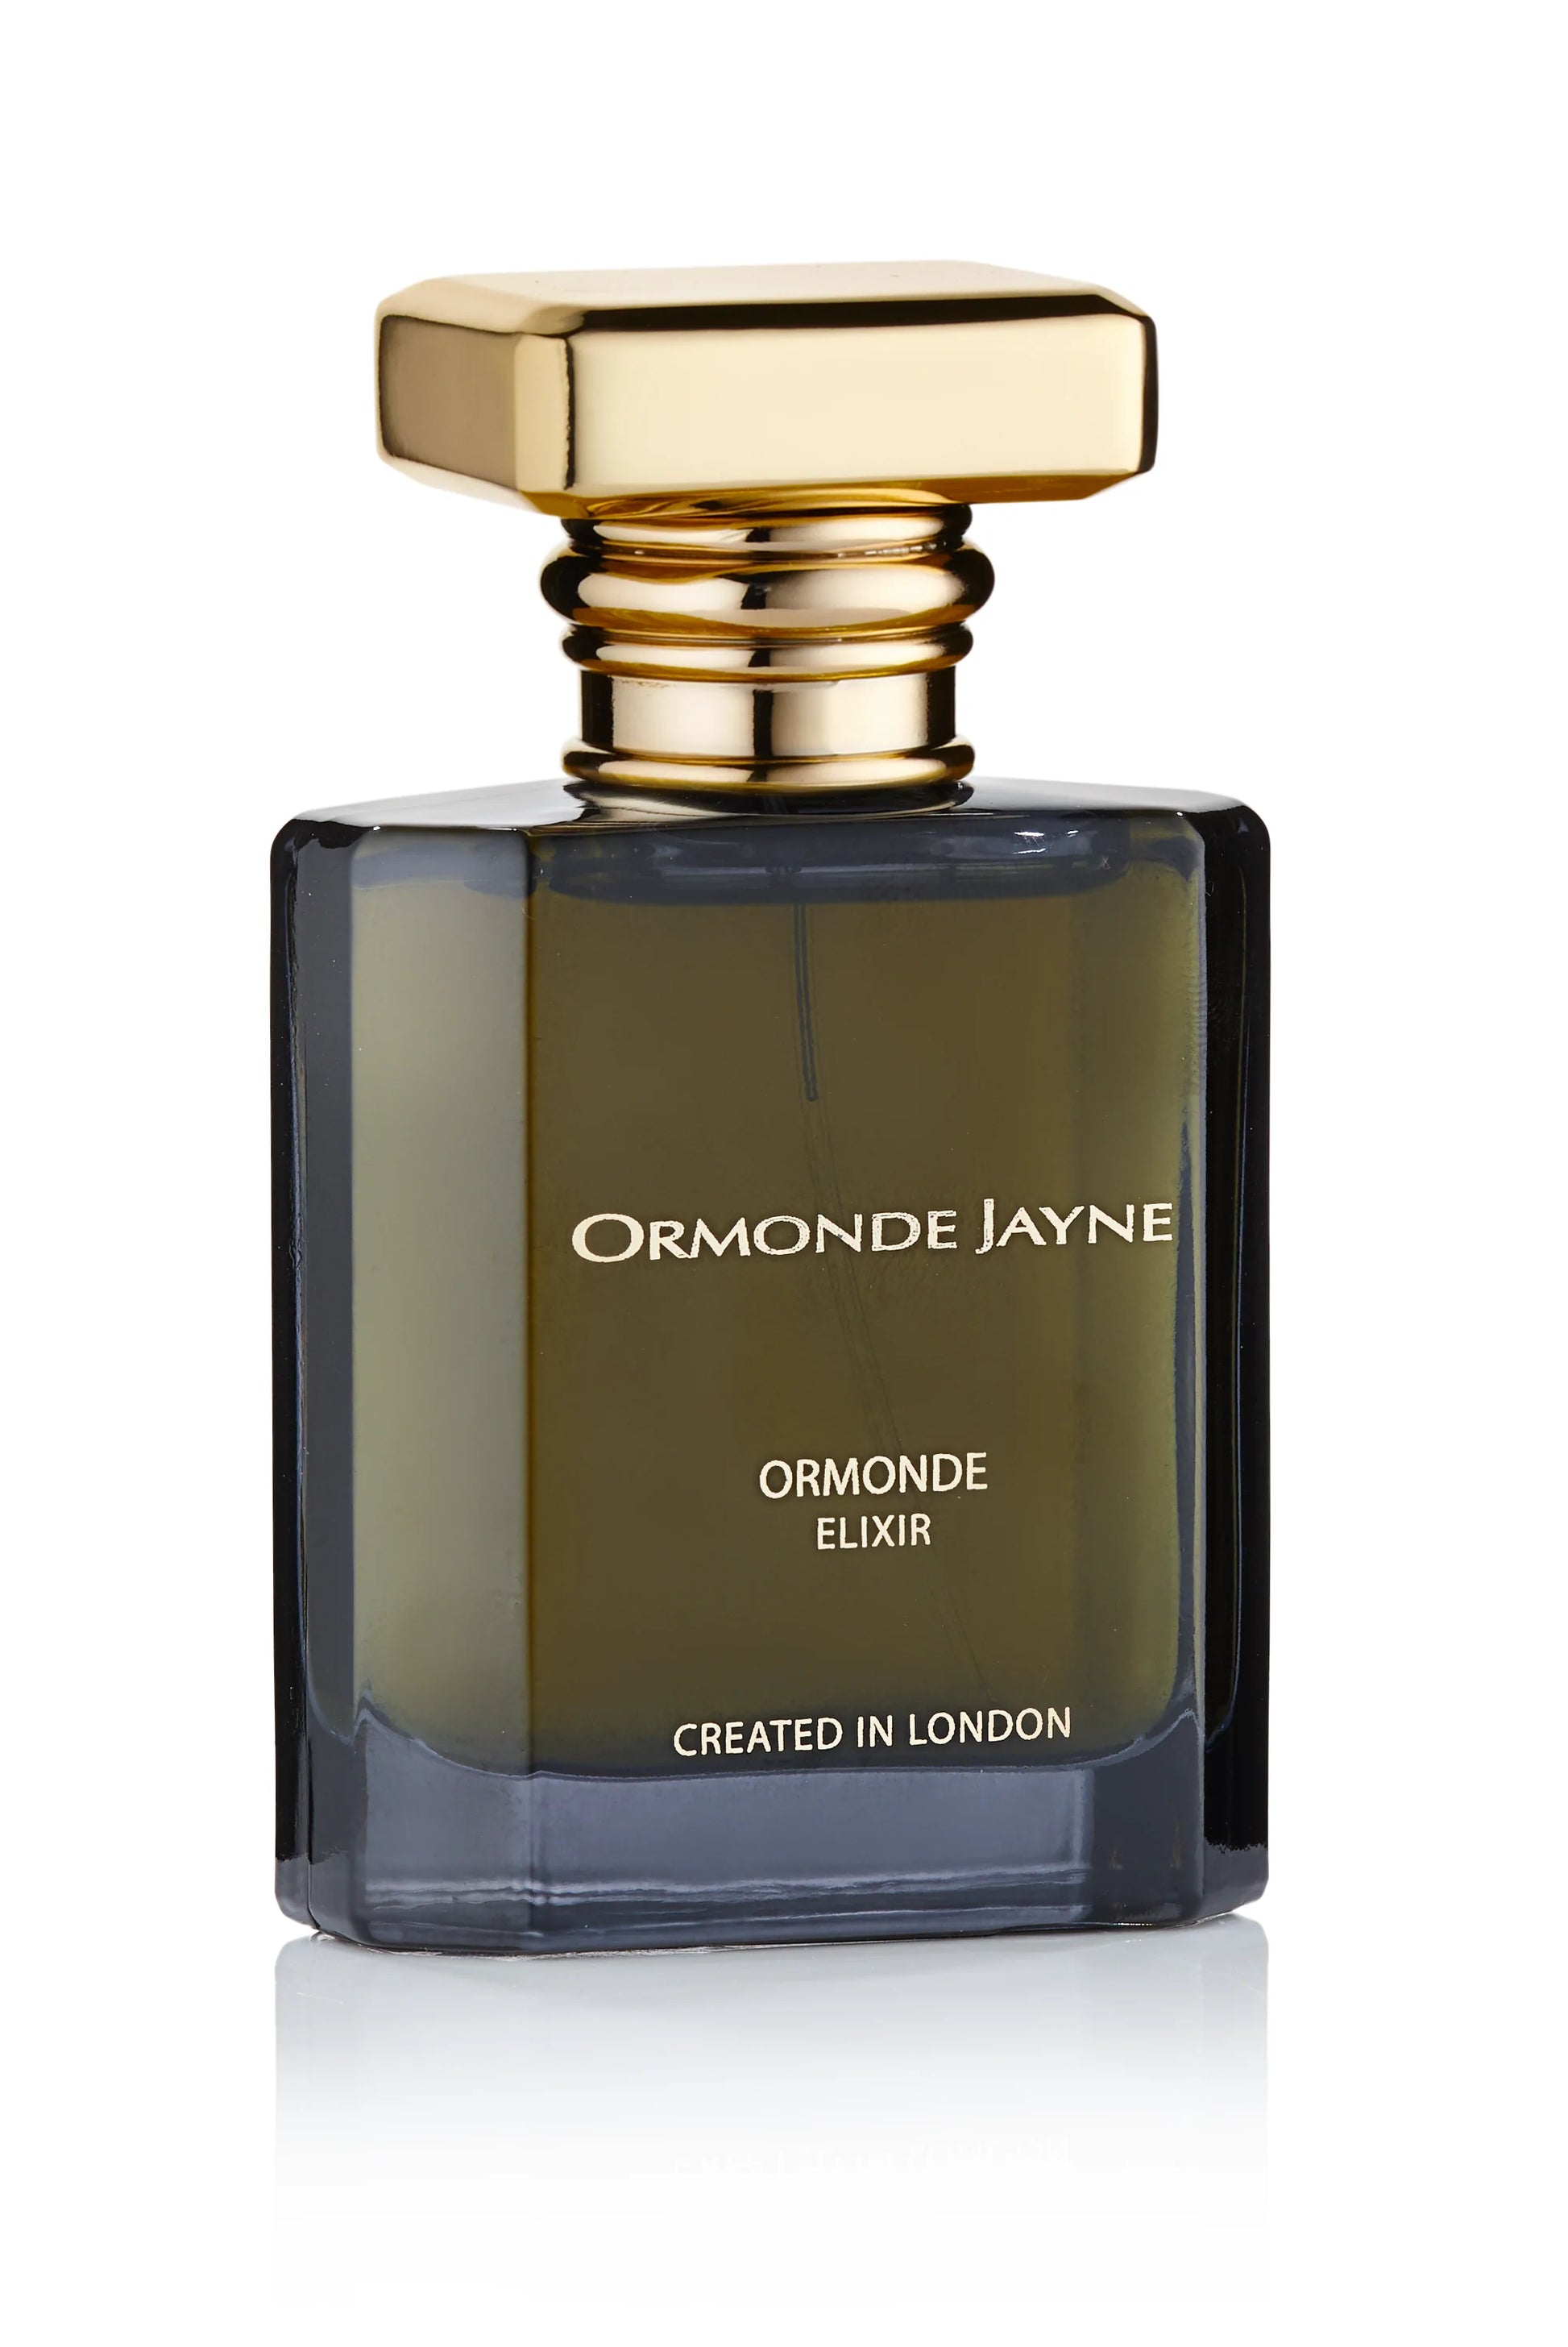 Ormonde Jayne Ormonde Elixir 2ml 0.06 fl. o.z. official scent sample